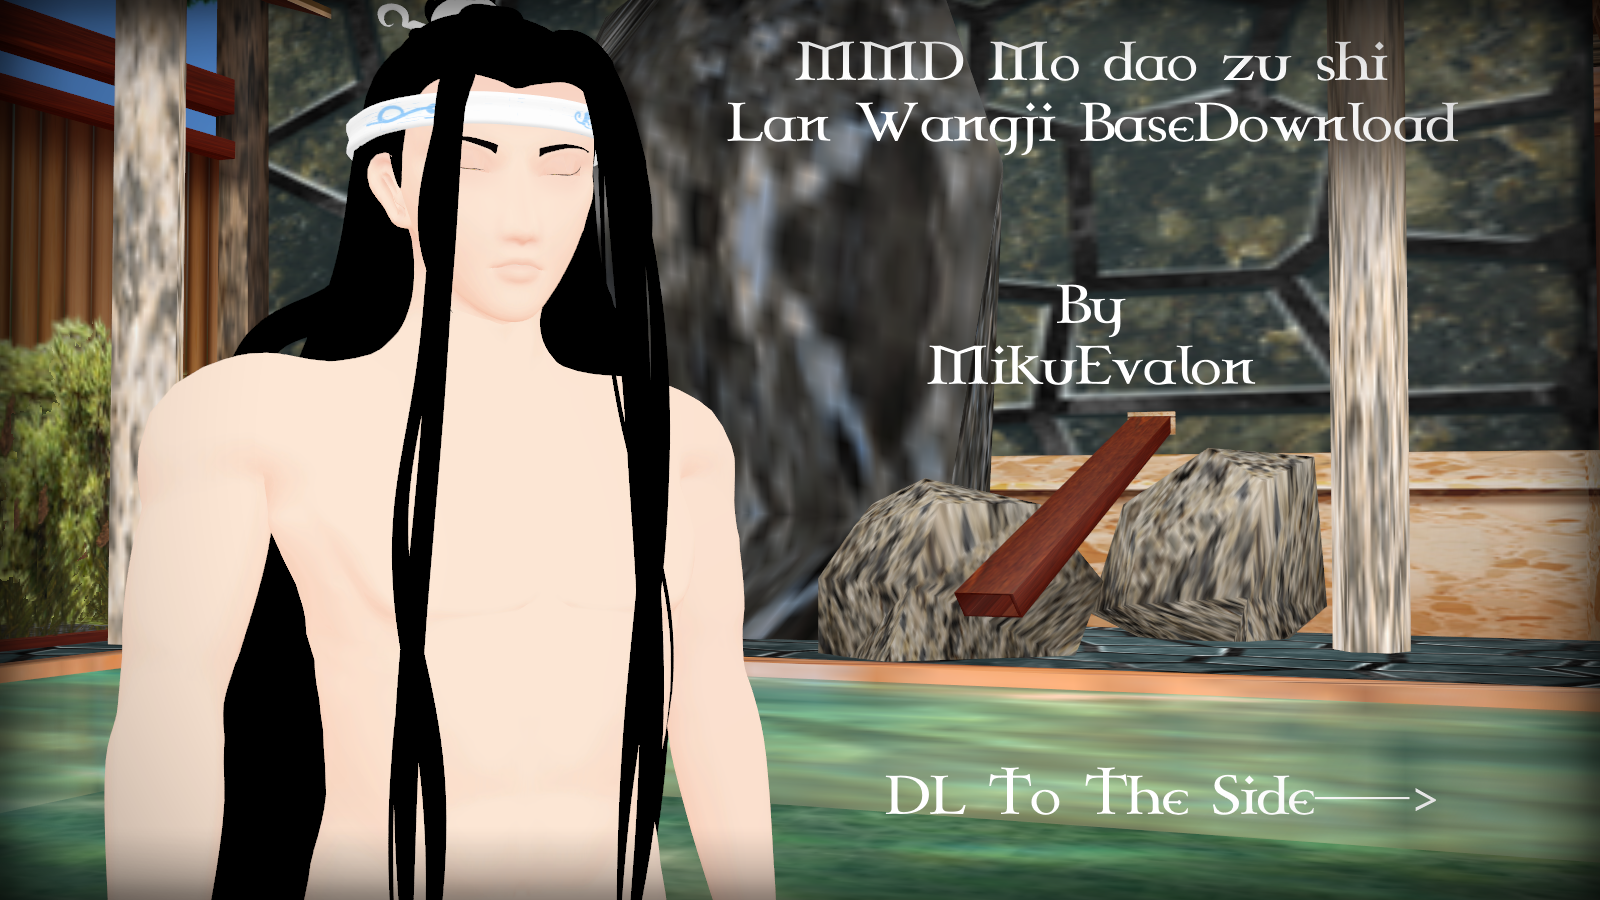 MMD Mo dao zu shi: Lan Wangji Base Download by MikuEvalon on DeviantArt